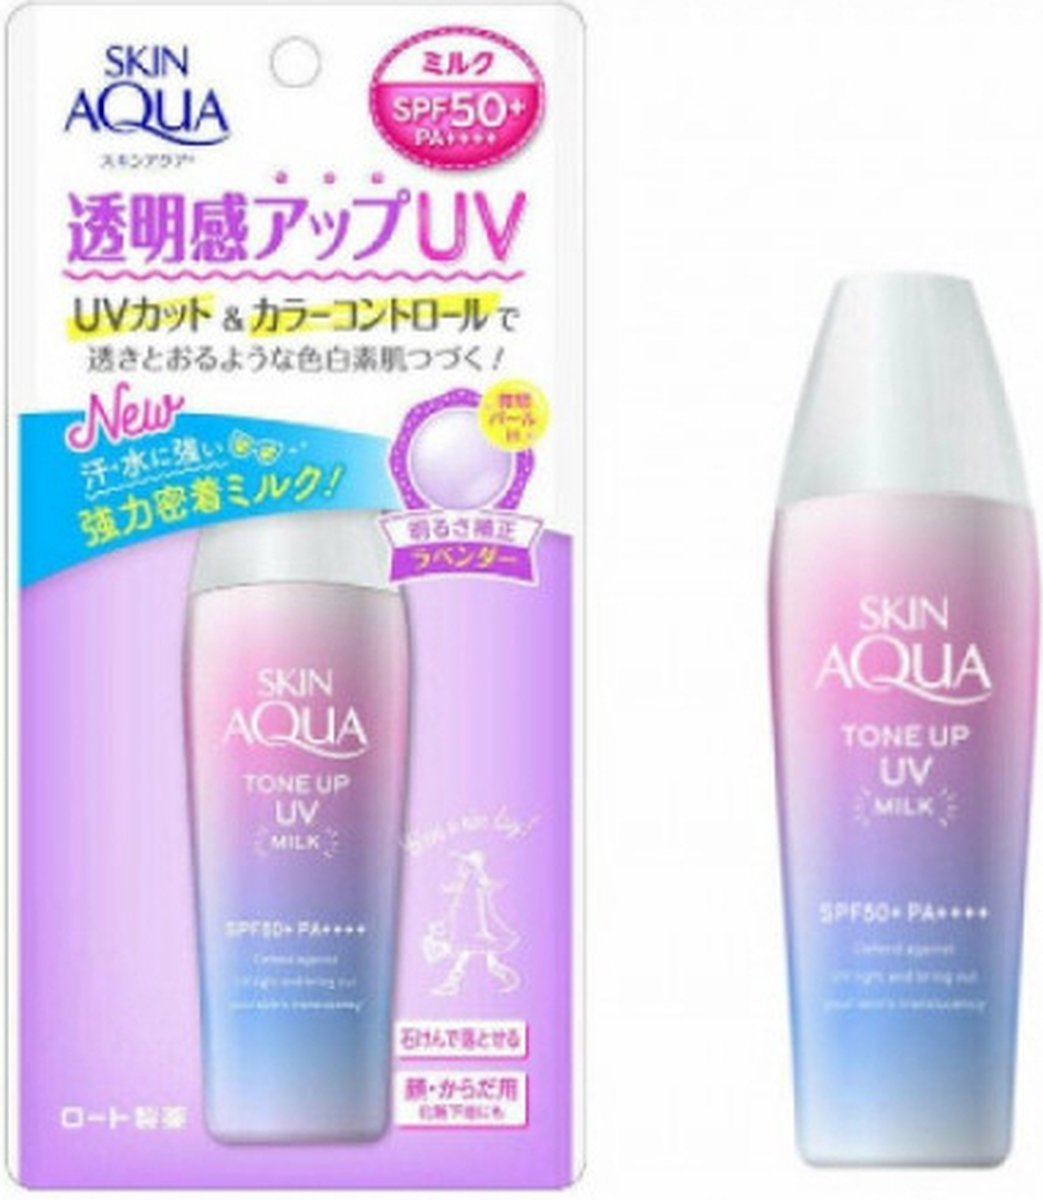 Skin Aqua Tone Up UV Milk SPF 50+ PA++++